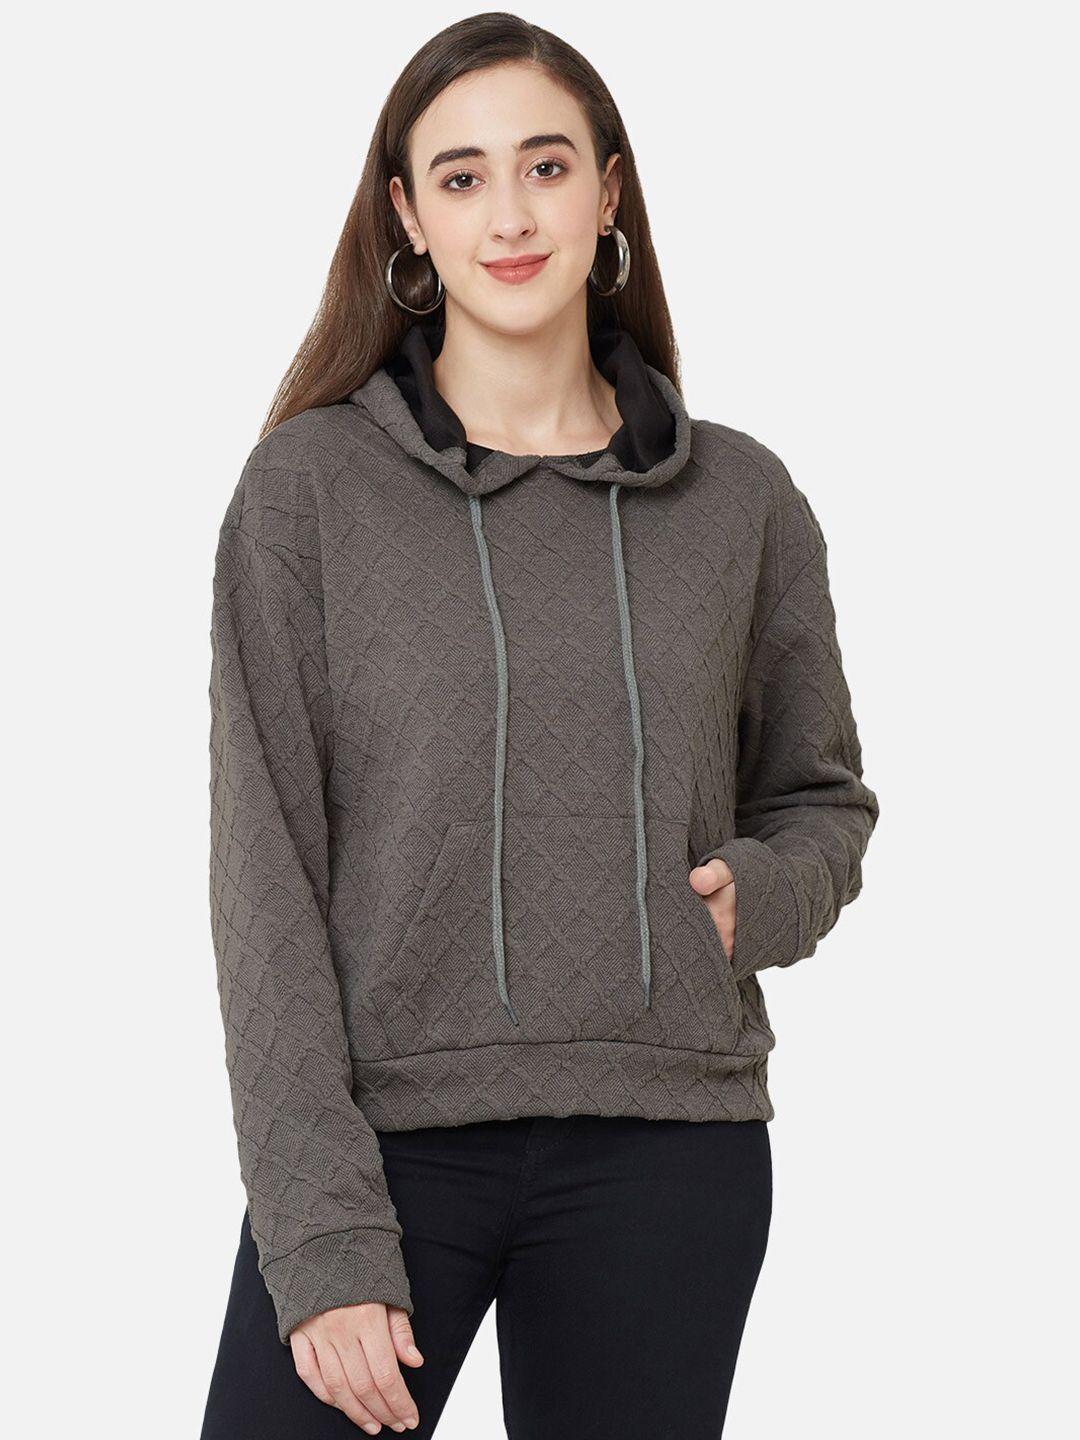 109f women grey sweatshirt